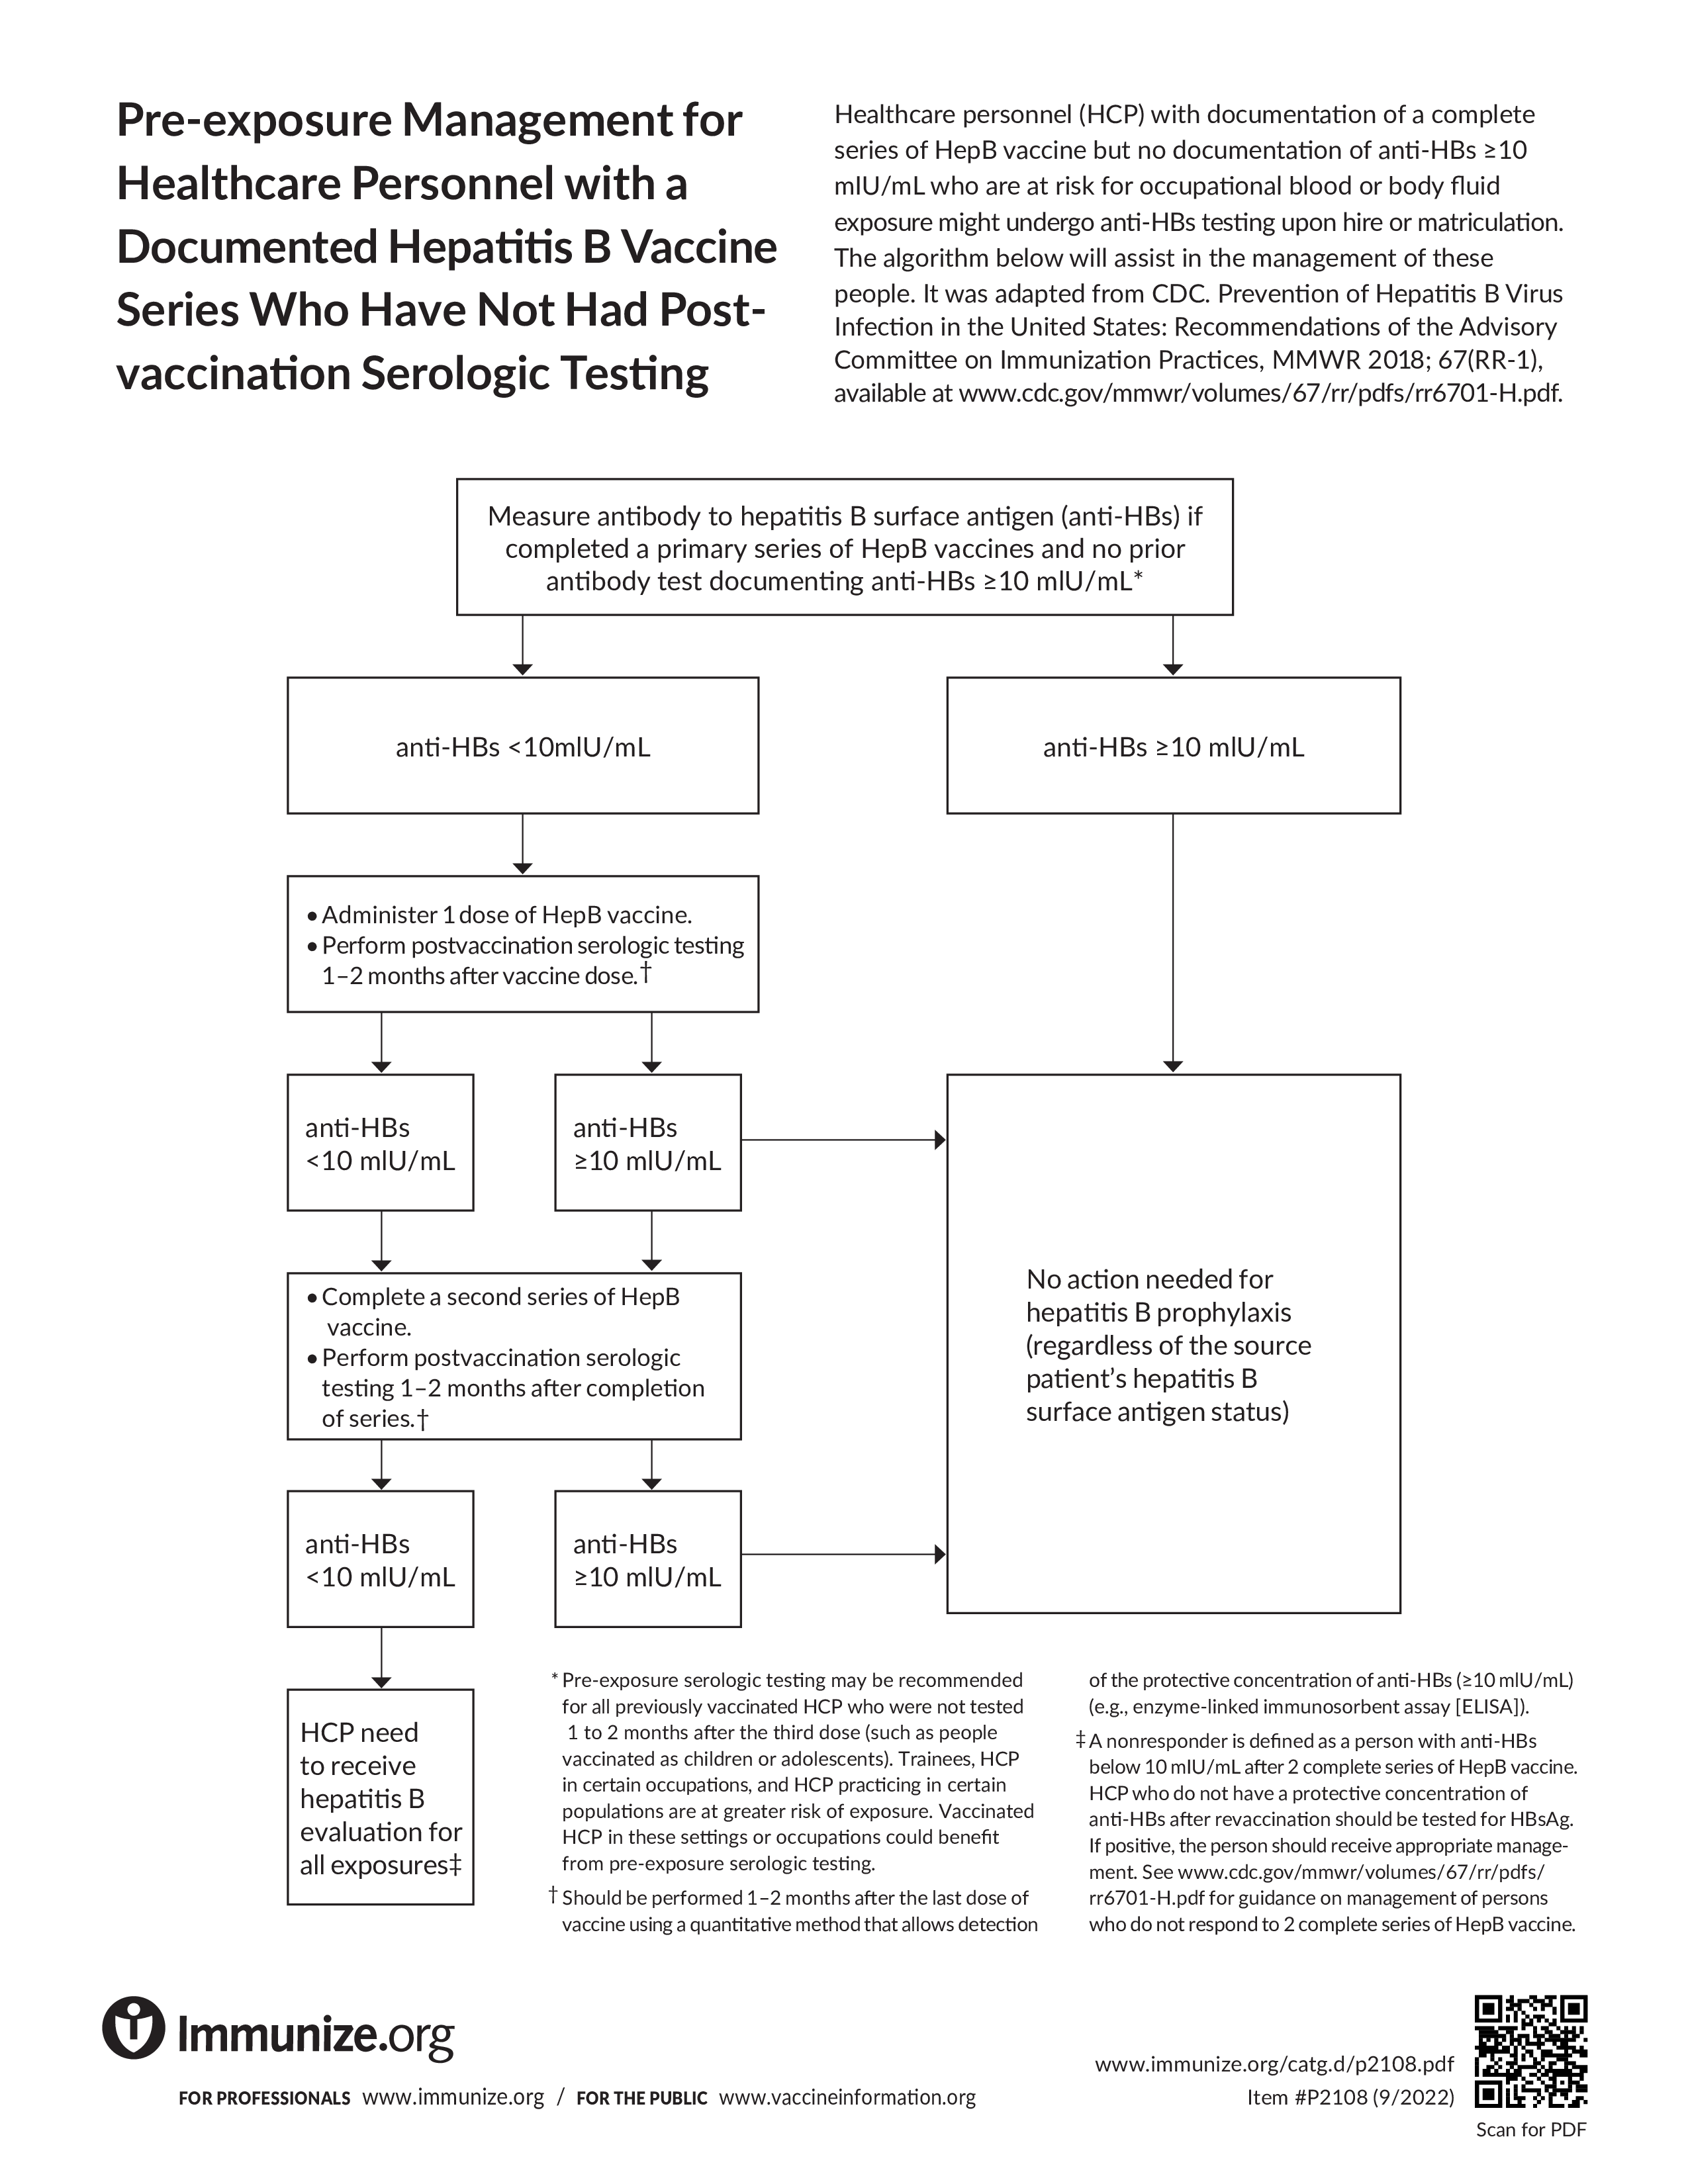 factsheet showing a flow chart